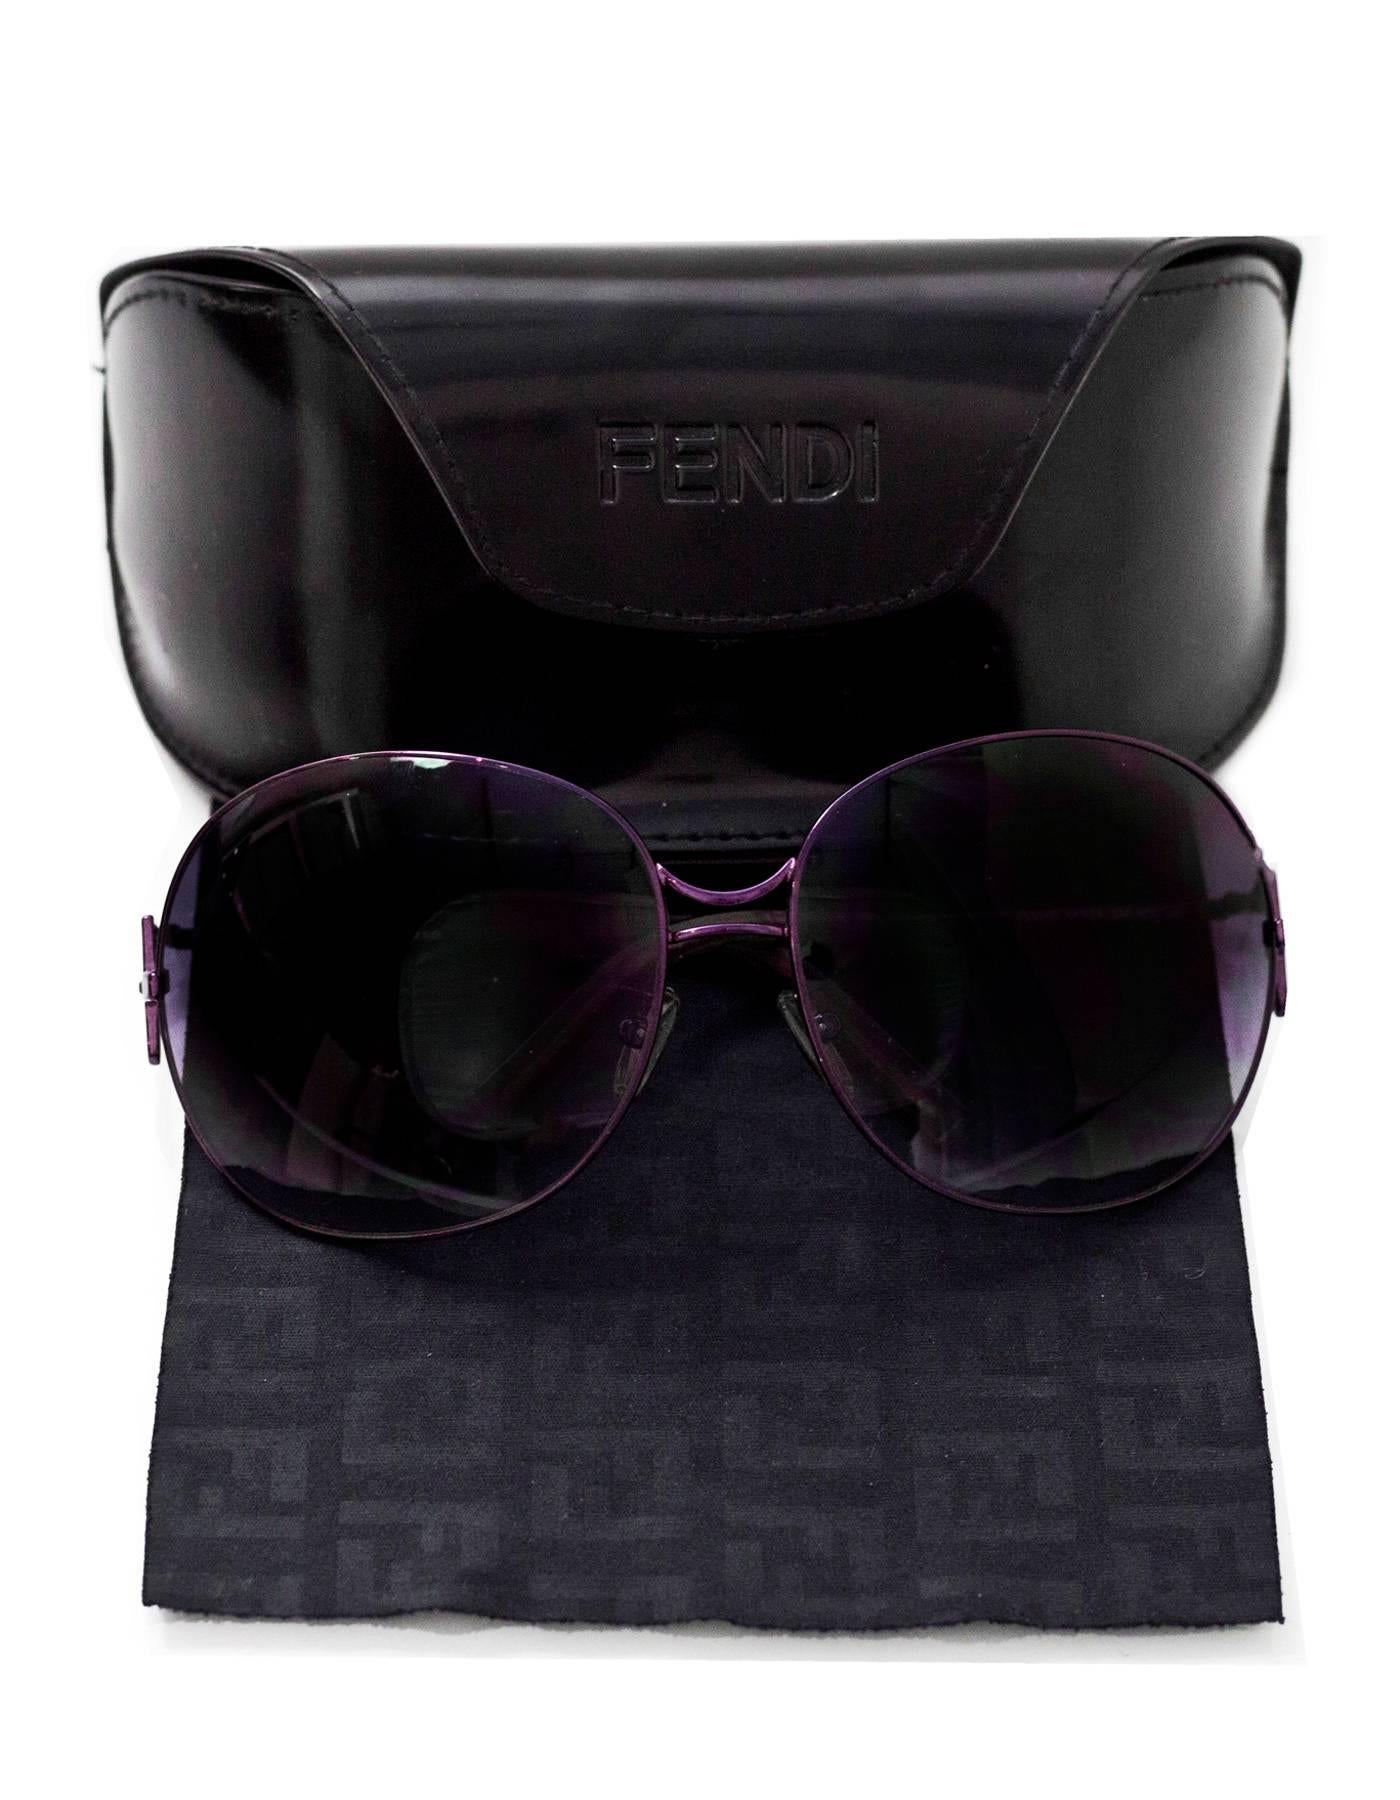 Fendi Purple Round Sunglasses with Case 4